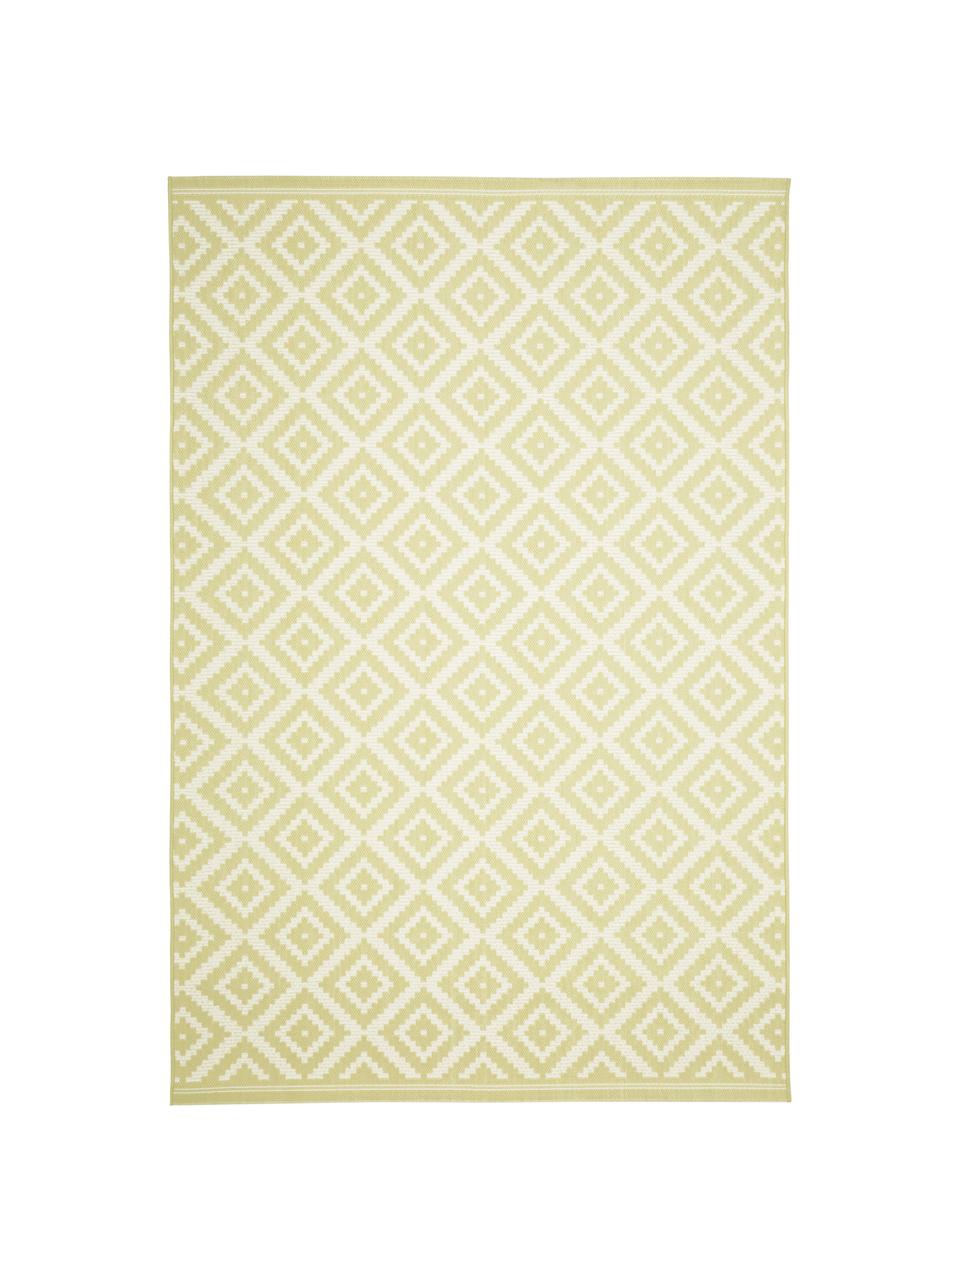 In- & outdoor vloerkleed met patroon Miami in geel/wit, 86% polypropyleen, 14% polyester, Wit, geel, B 200 x L 290 cm (maat L)